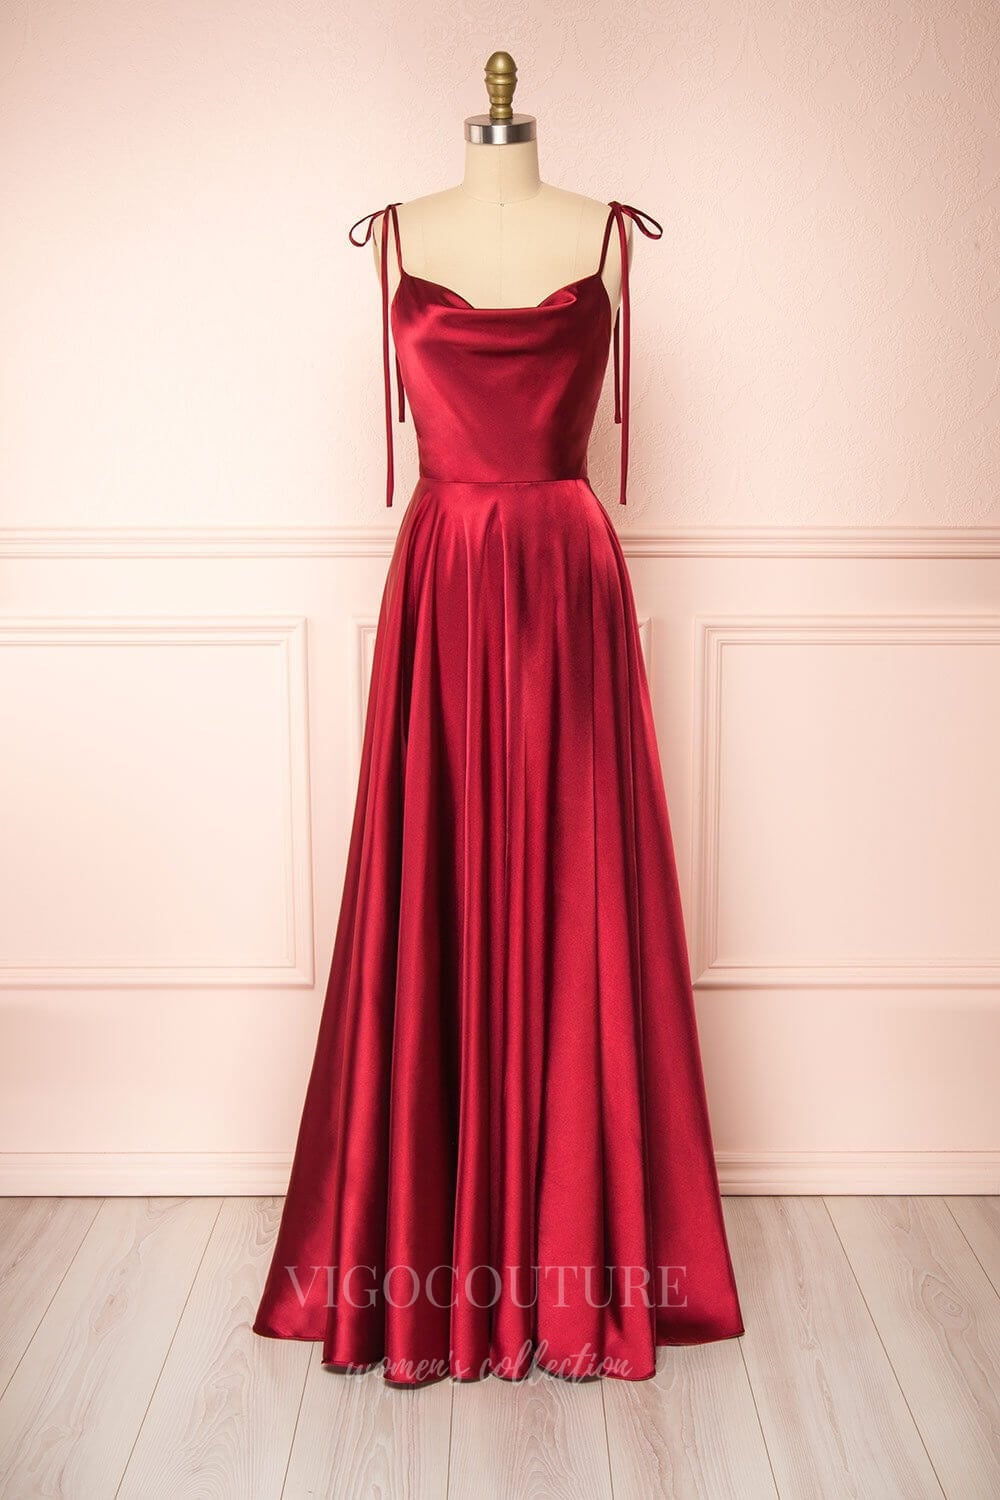 vigocouture-Sage Spaghetti Strap Prom Dress 20580-Prom Dresses-vigocouture-Burgundy-US2-